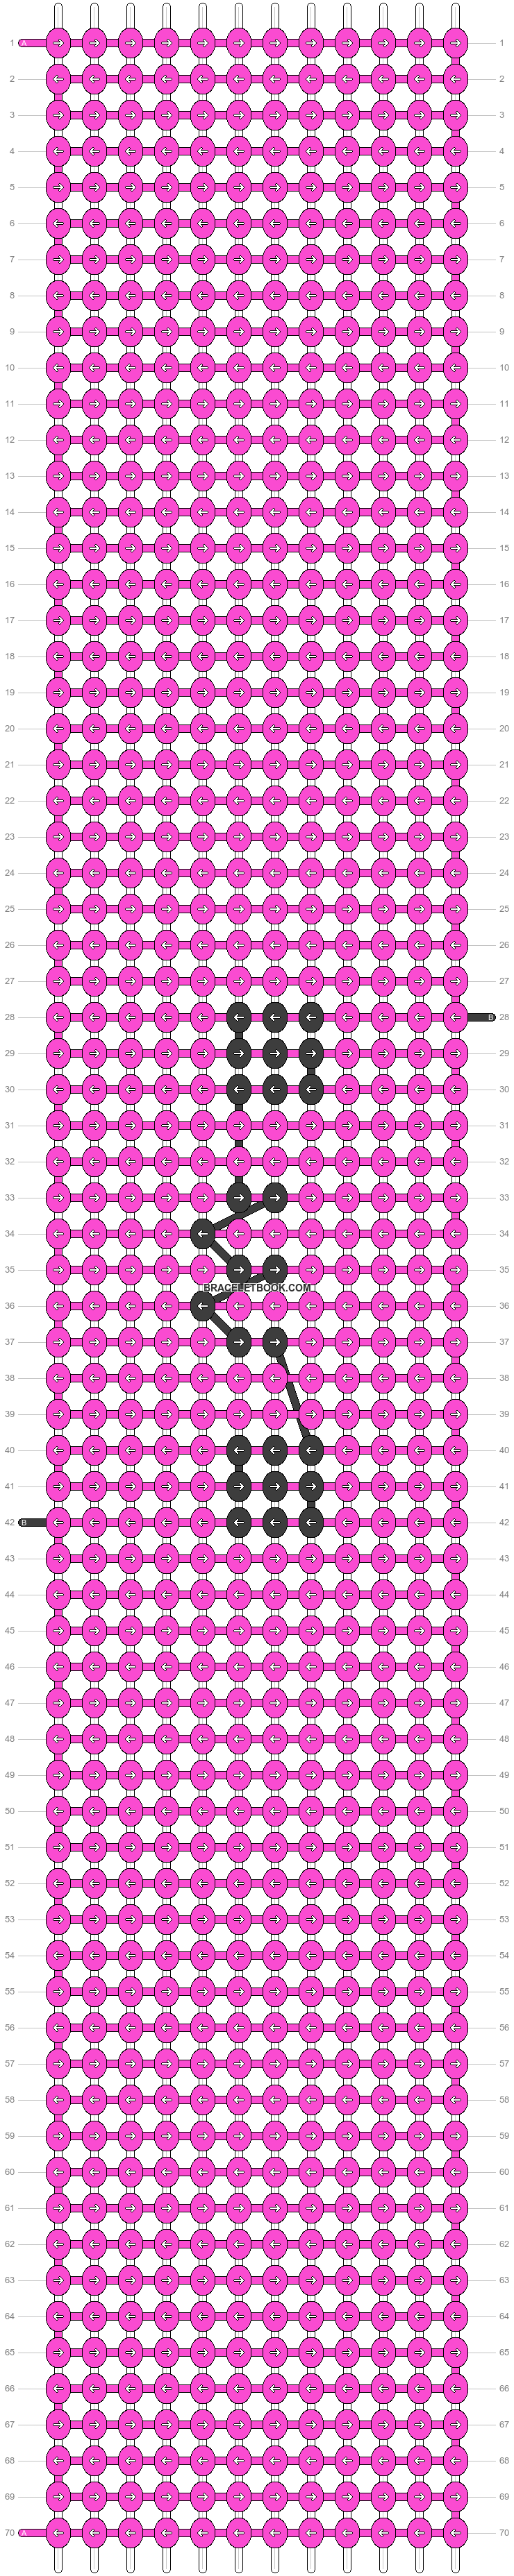 Alpha pattern #45878 variation #76094 pattern